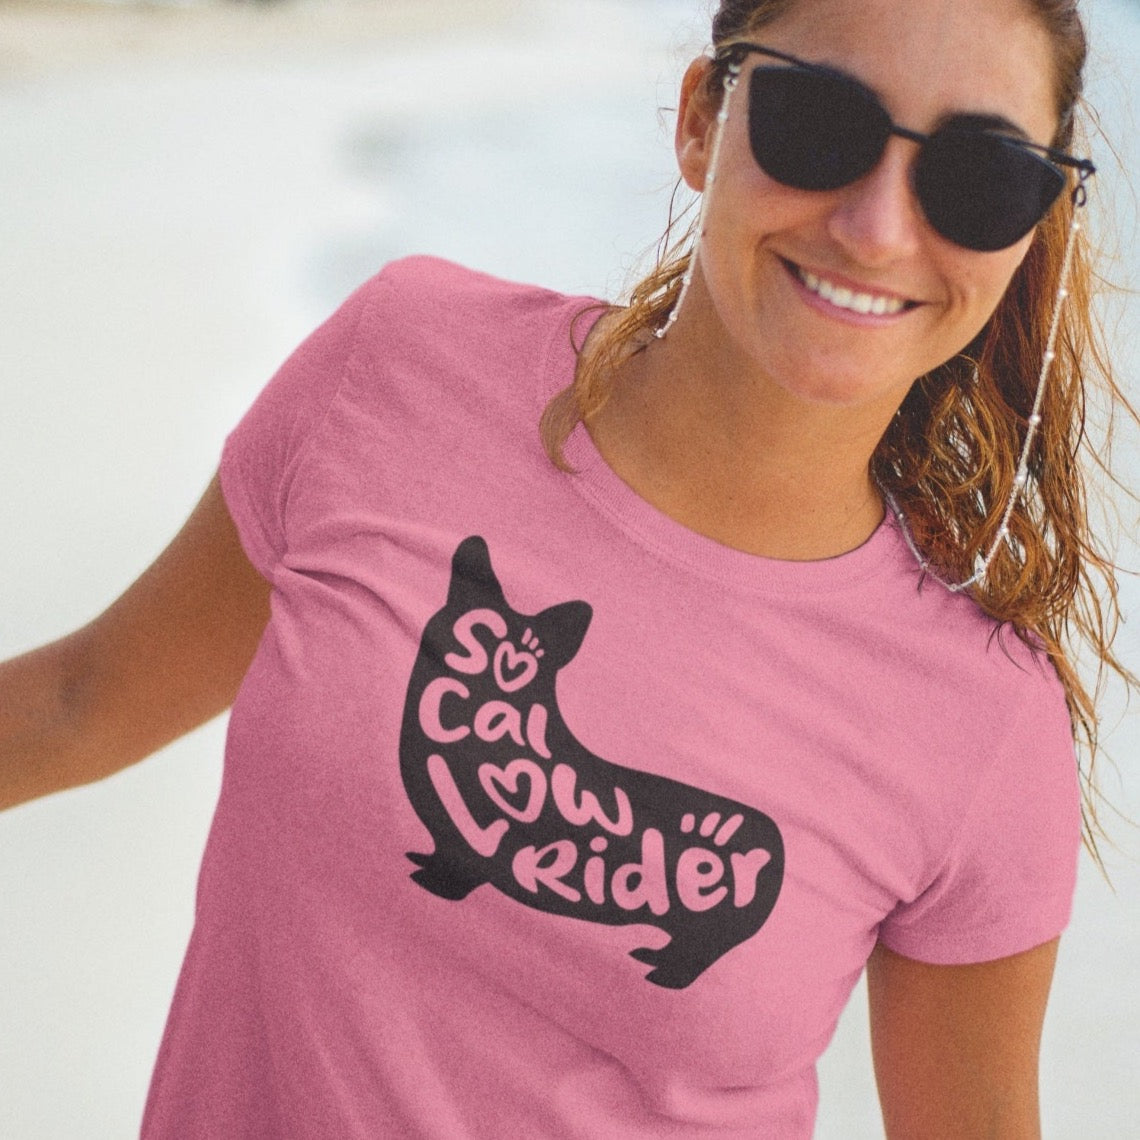 SoCal Lowrider corgi woman men t-shirt Southern California dog unisex short sleeve shirt